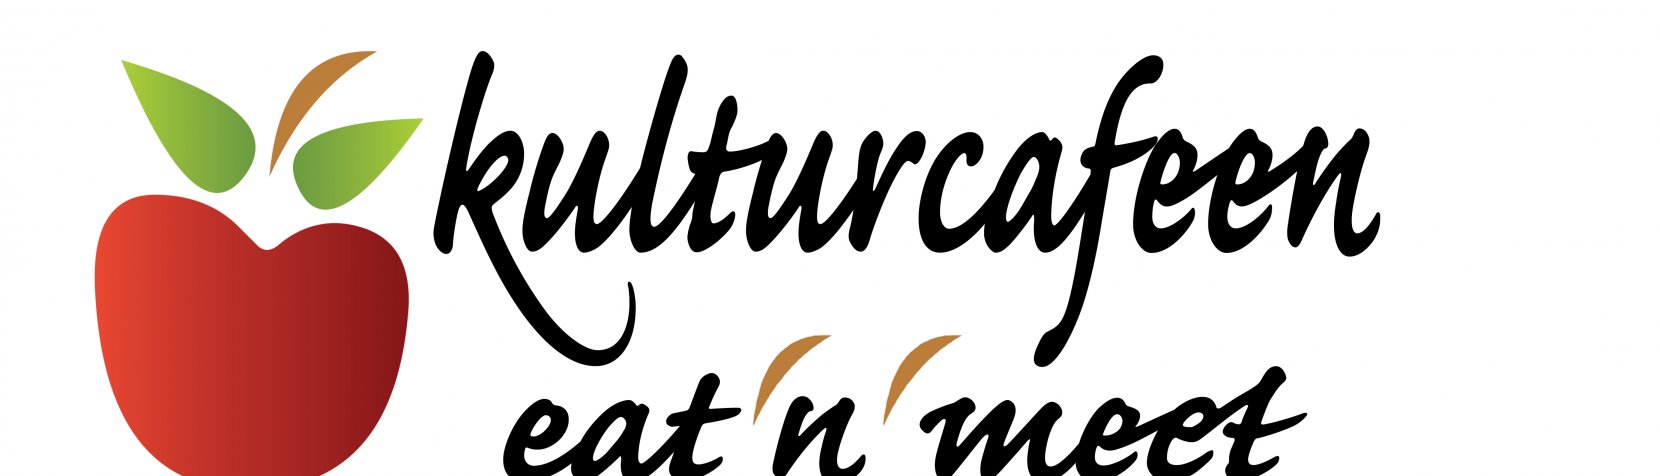 Kulturcafeen eat and meet logo